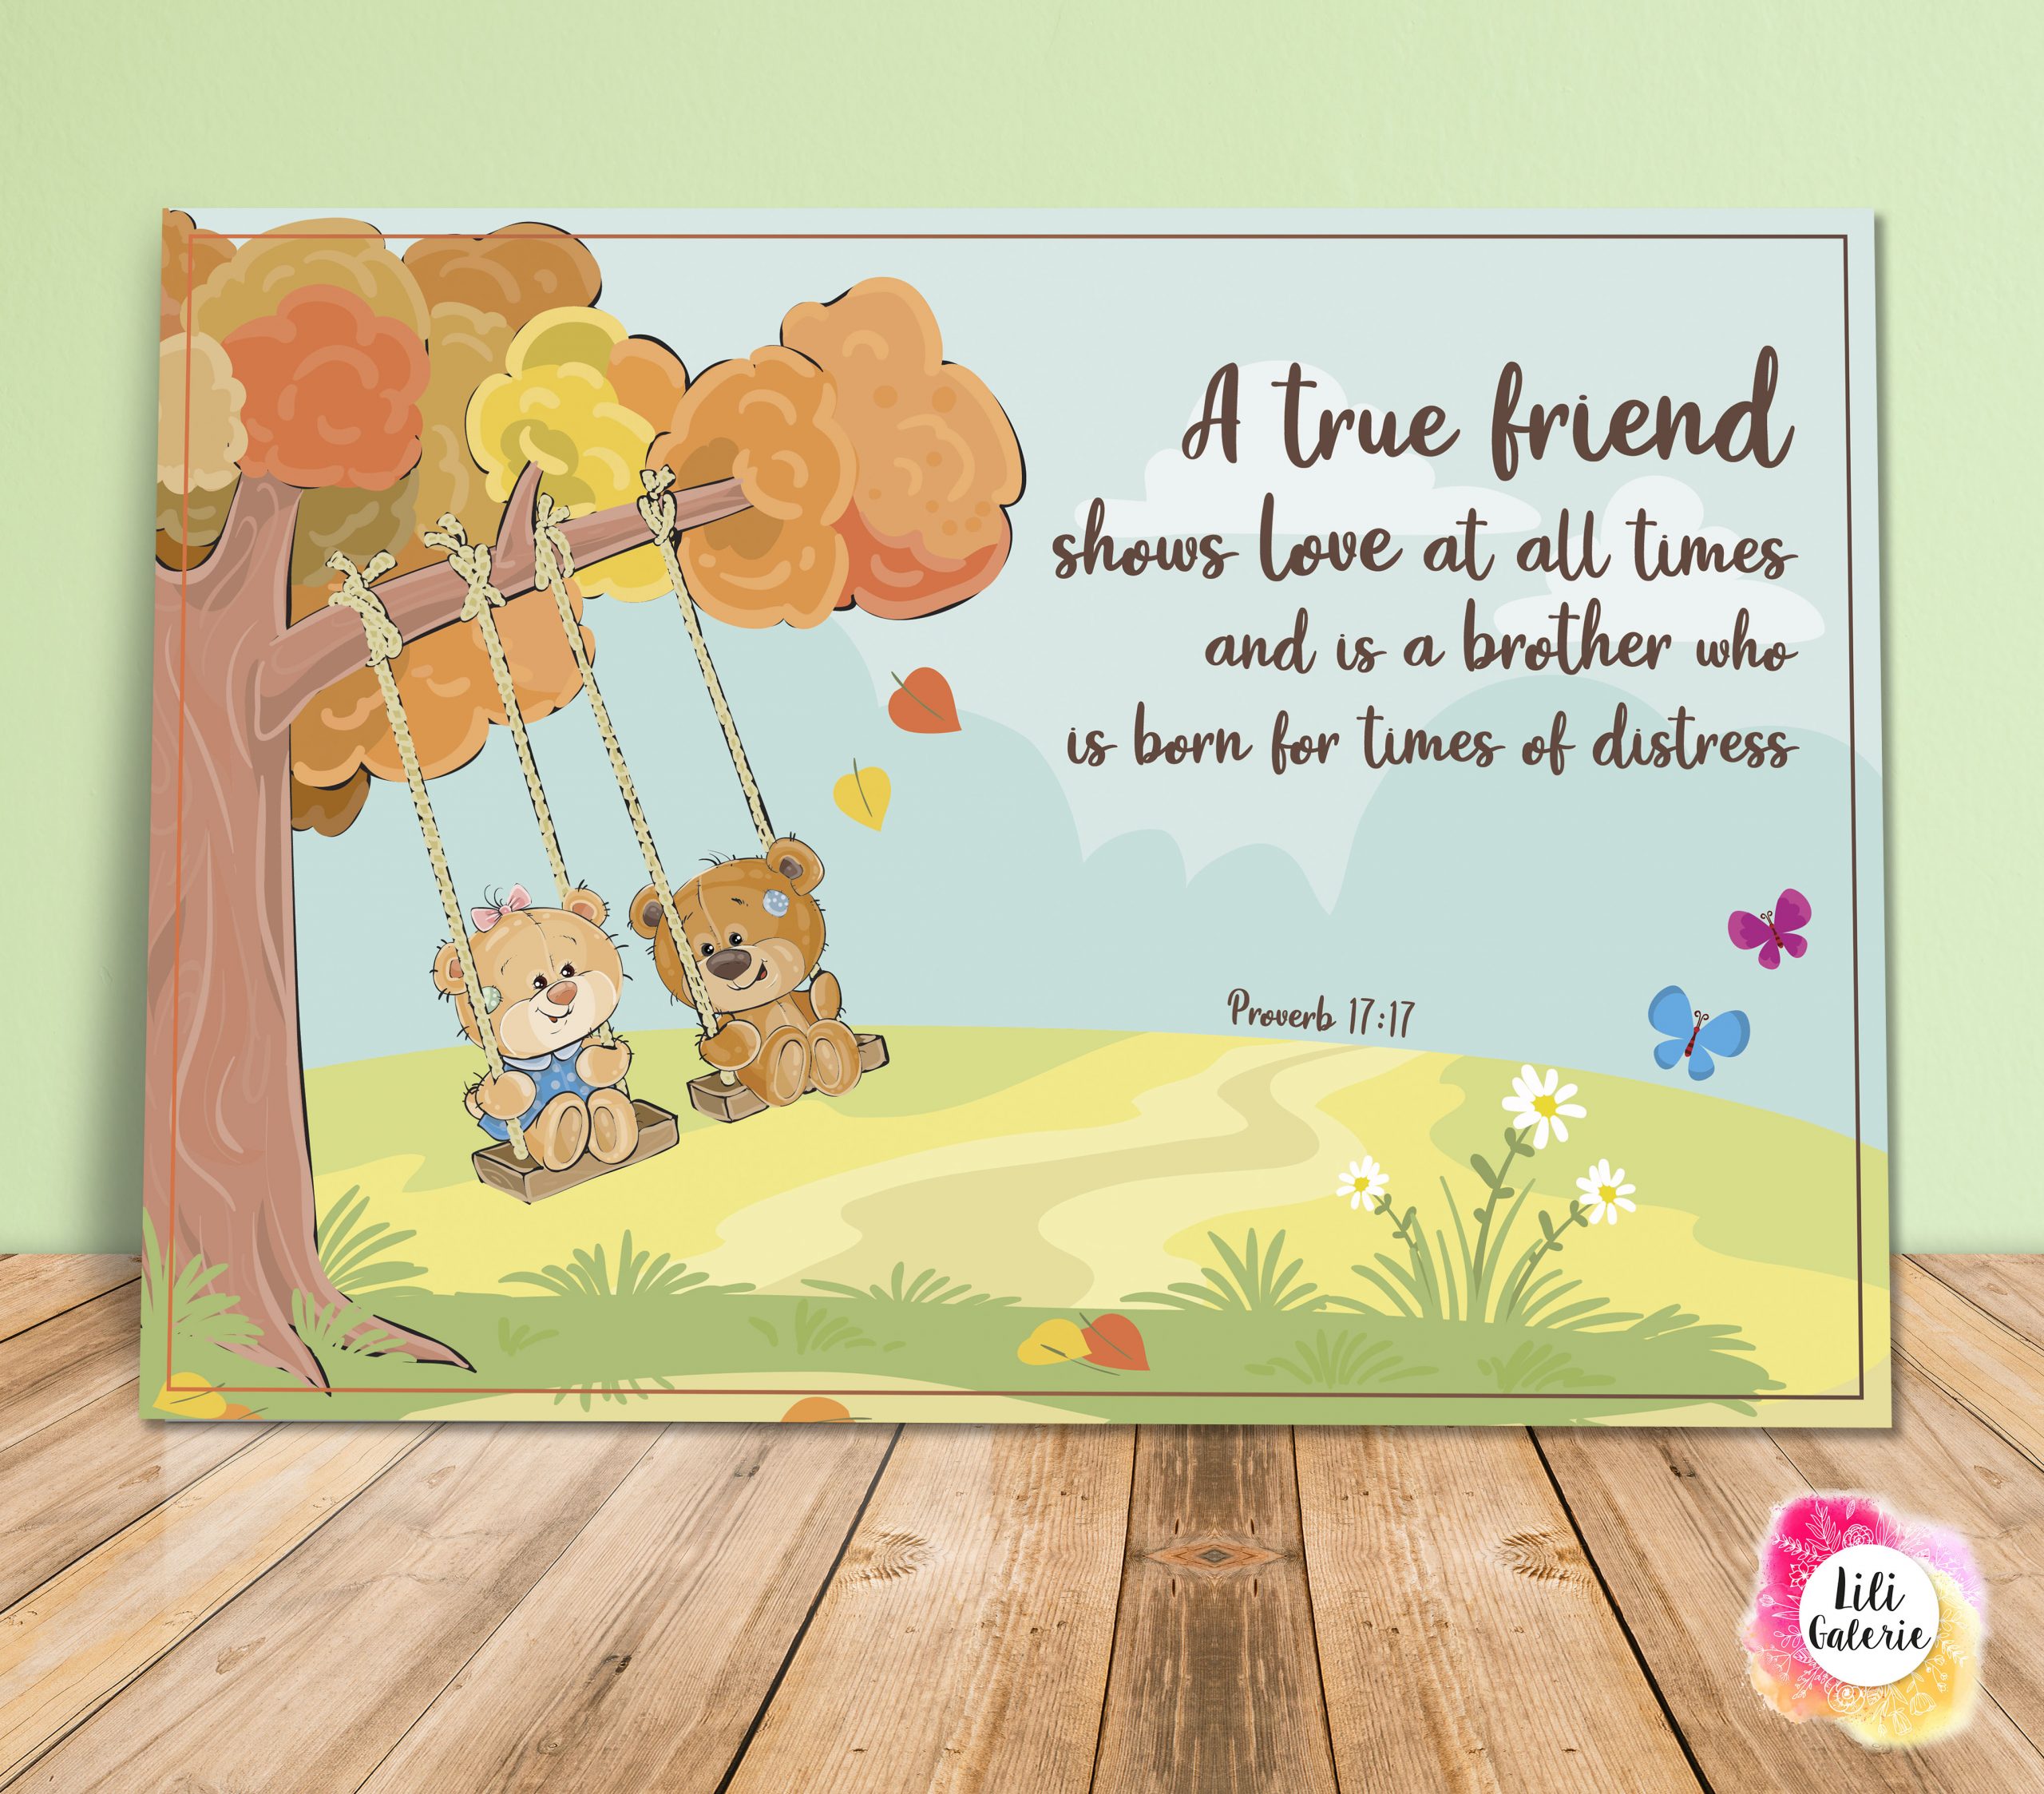 Proverb 17:17 - A true friend shows love... - Scripture quote digital printable - JW